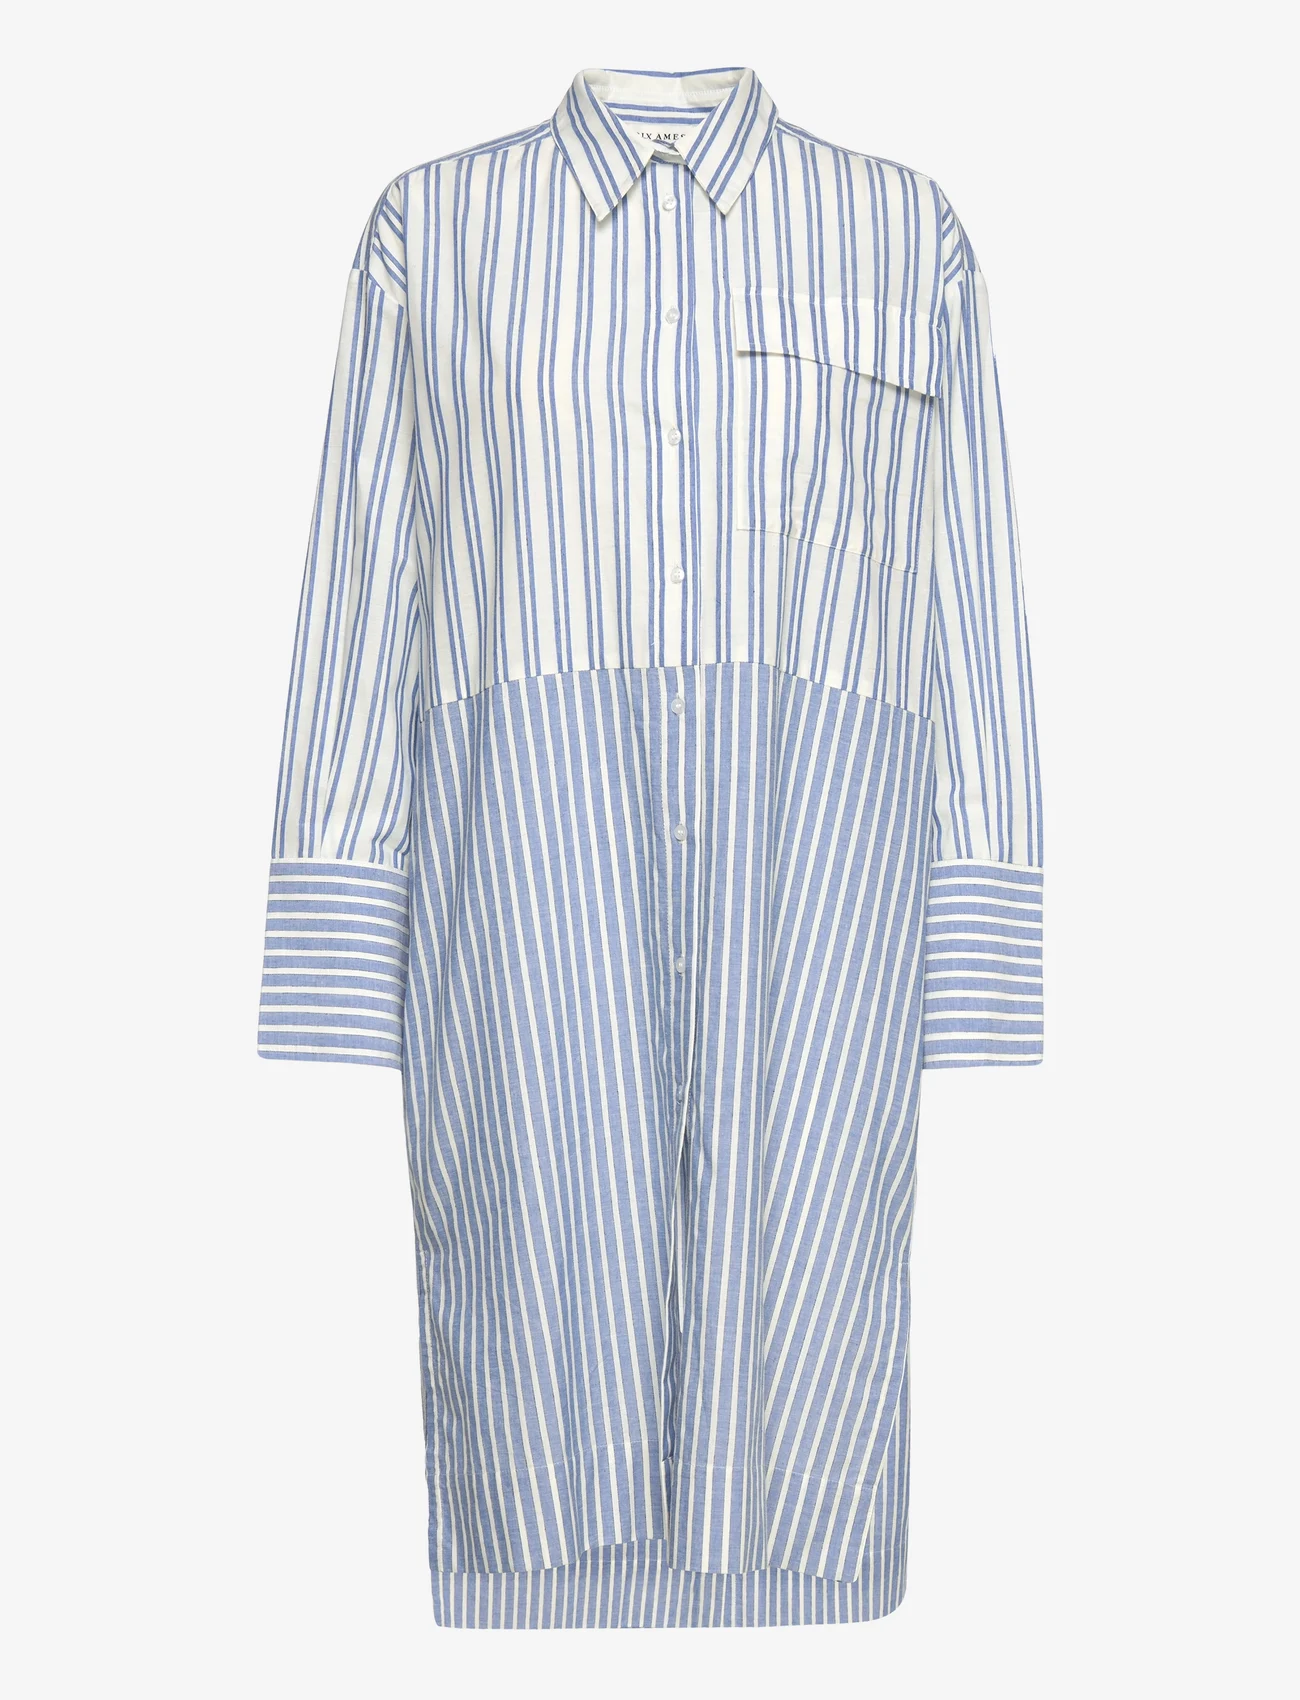 Six Ames - LISSIE - marškinių tipo suknelės - oxford striped mix - 0